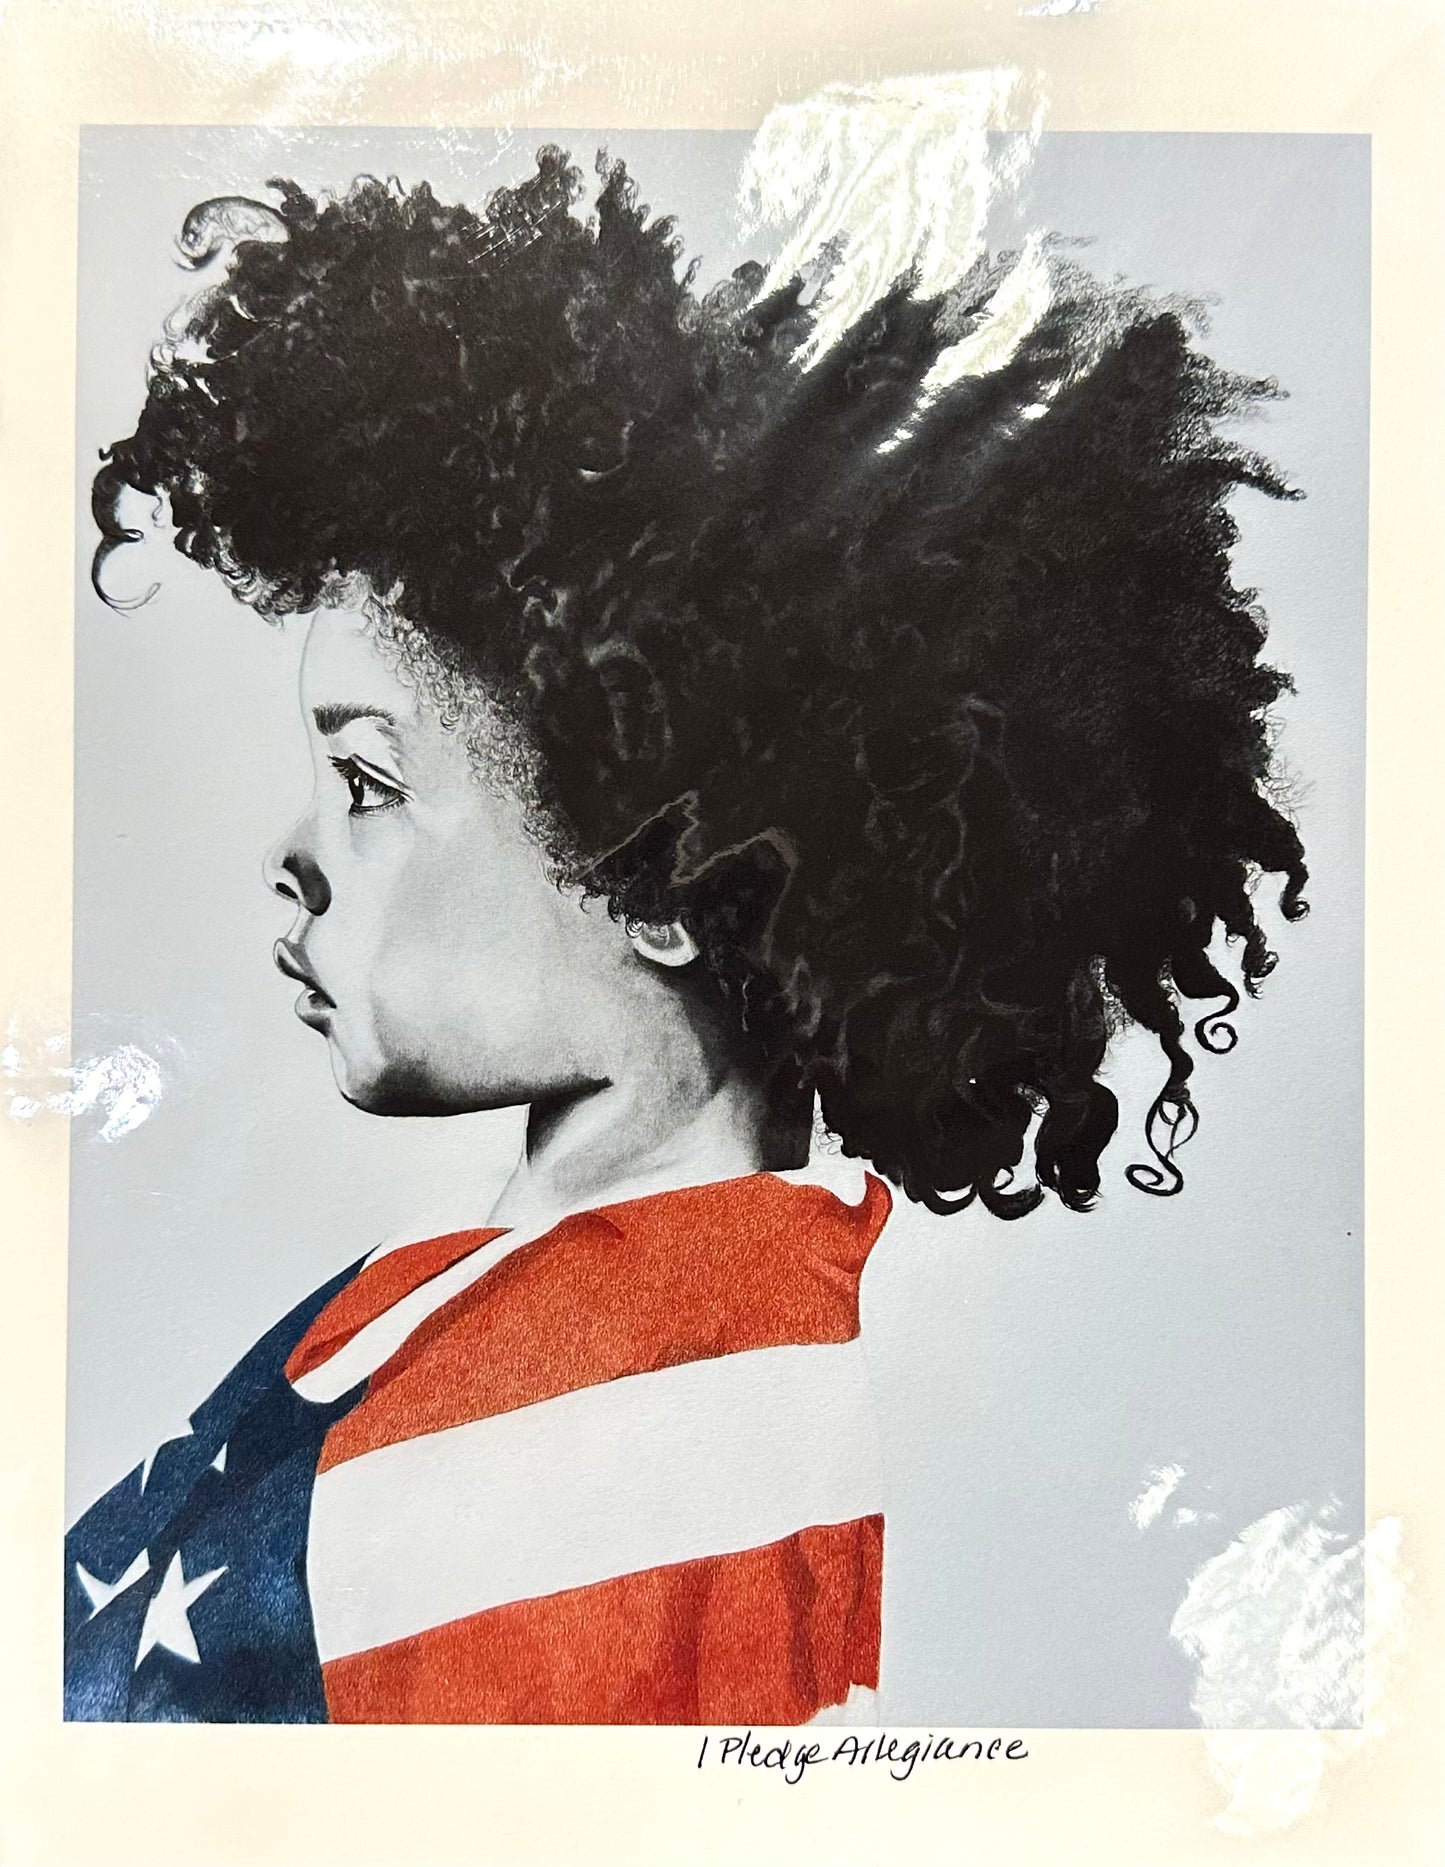 #09 - Child w/ American Flag “I Pledge Allegiance”